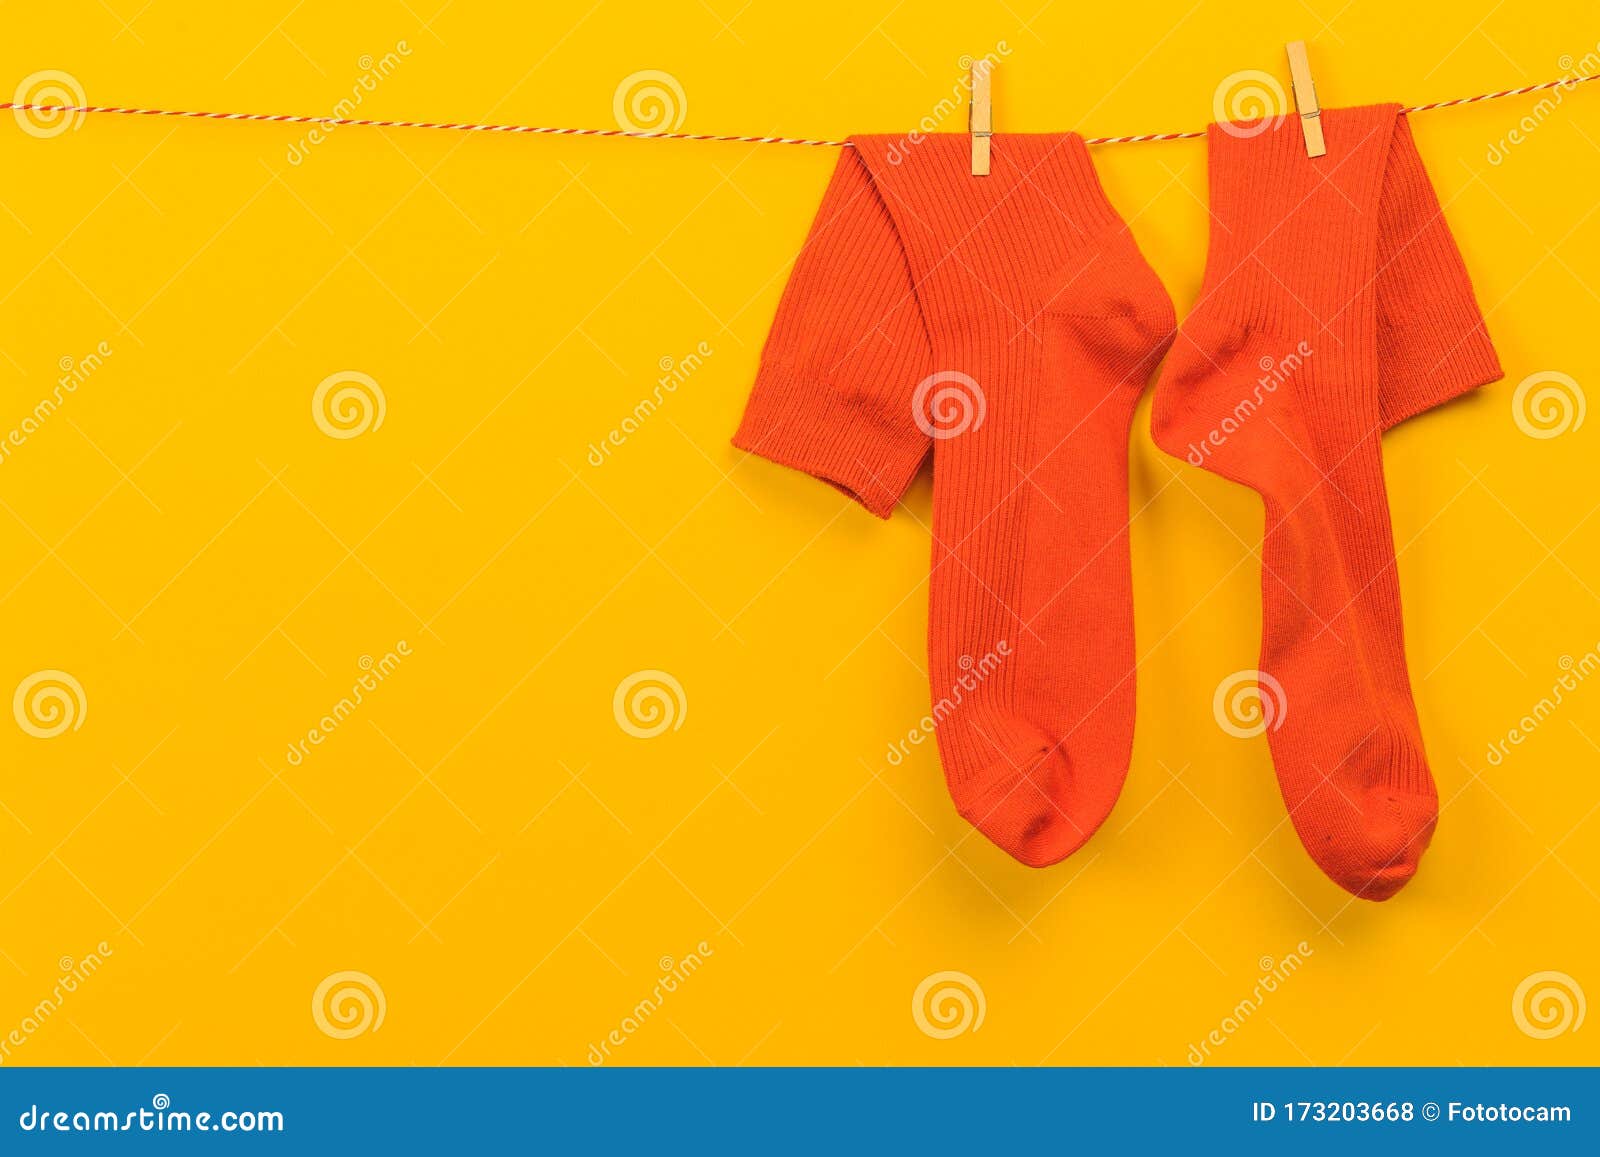 Colorful Orange Socks Hanging on a Rope on Yellow Background - Image ...